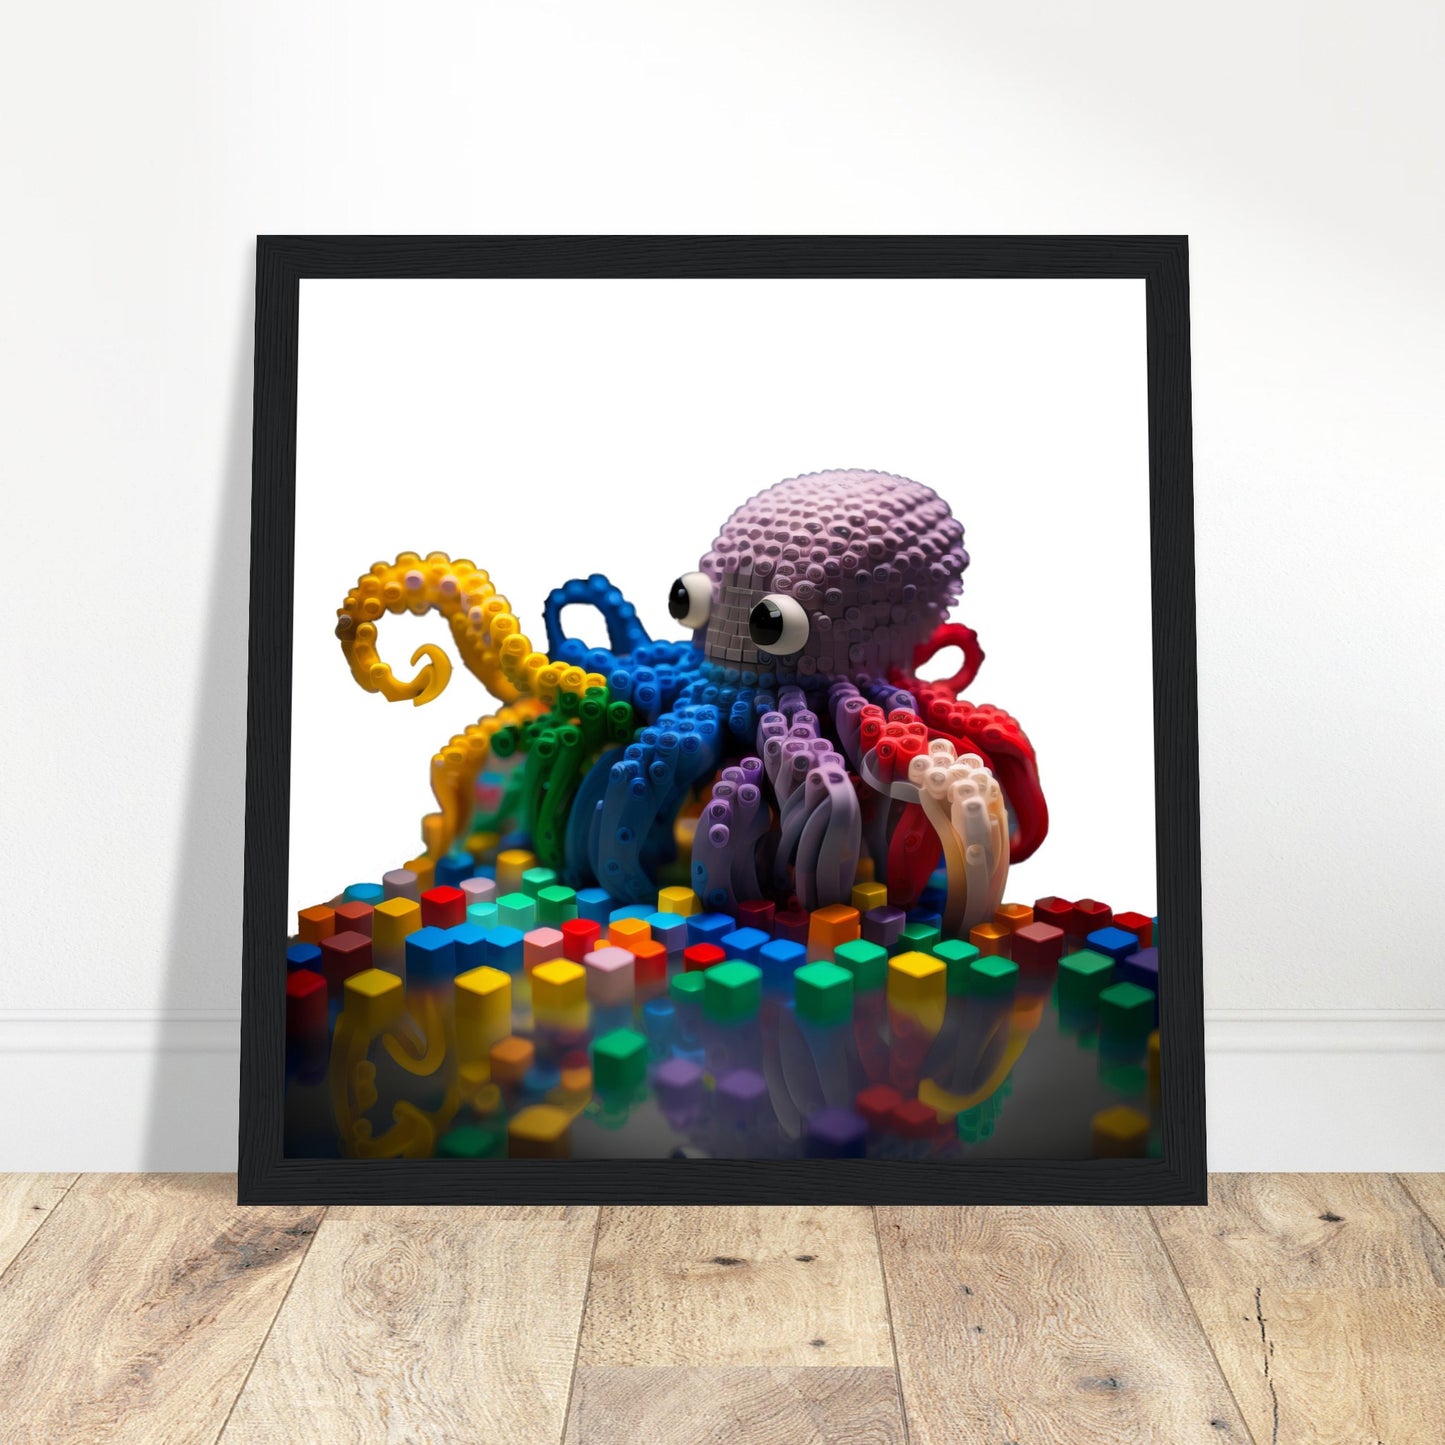 Octopus Artwork - Print Room Ltd Black frame 30x30 cm / 12x12"